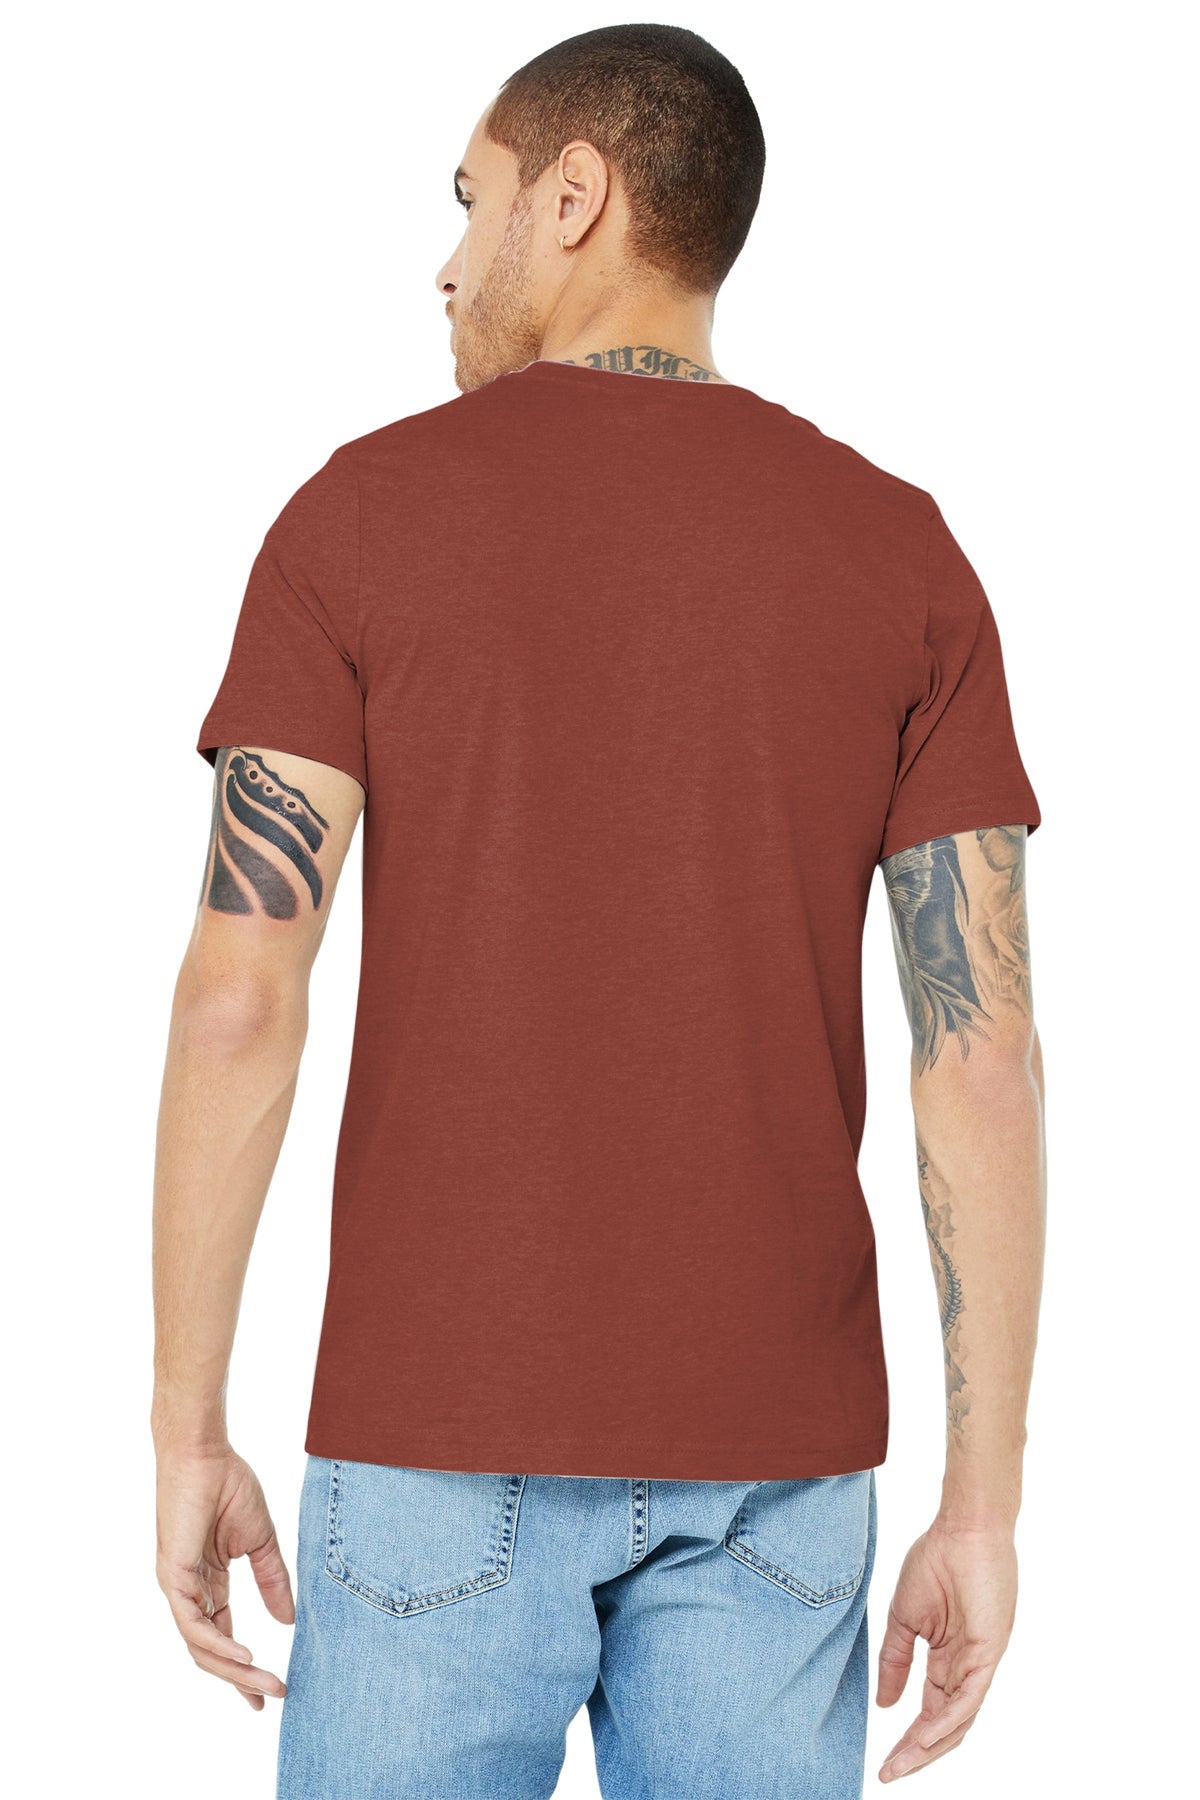 bella + canvas unisex jersey short sleeve t-shirt 3001c heather clay